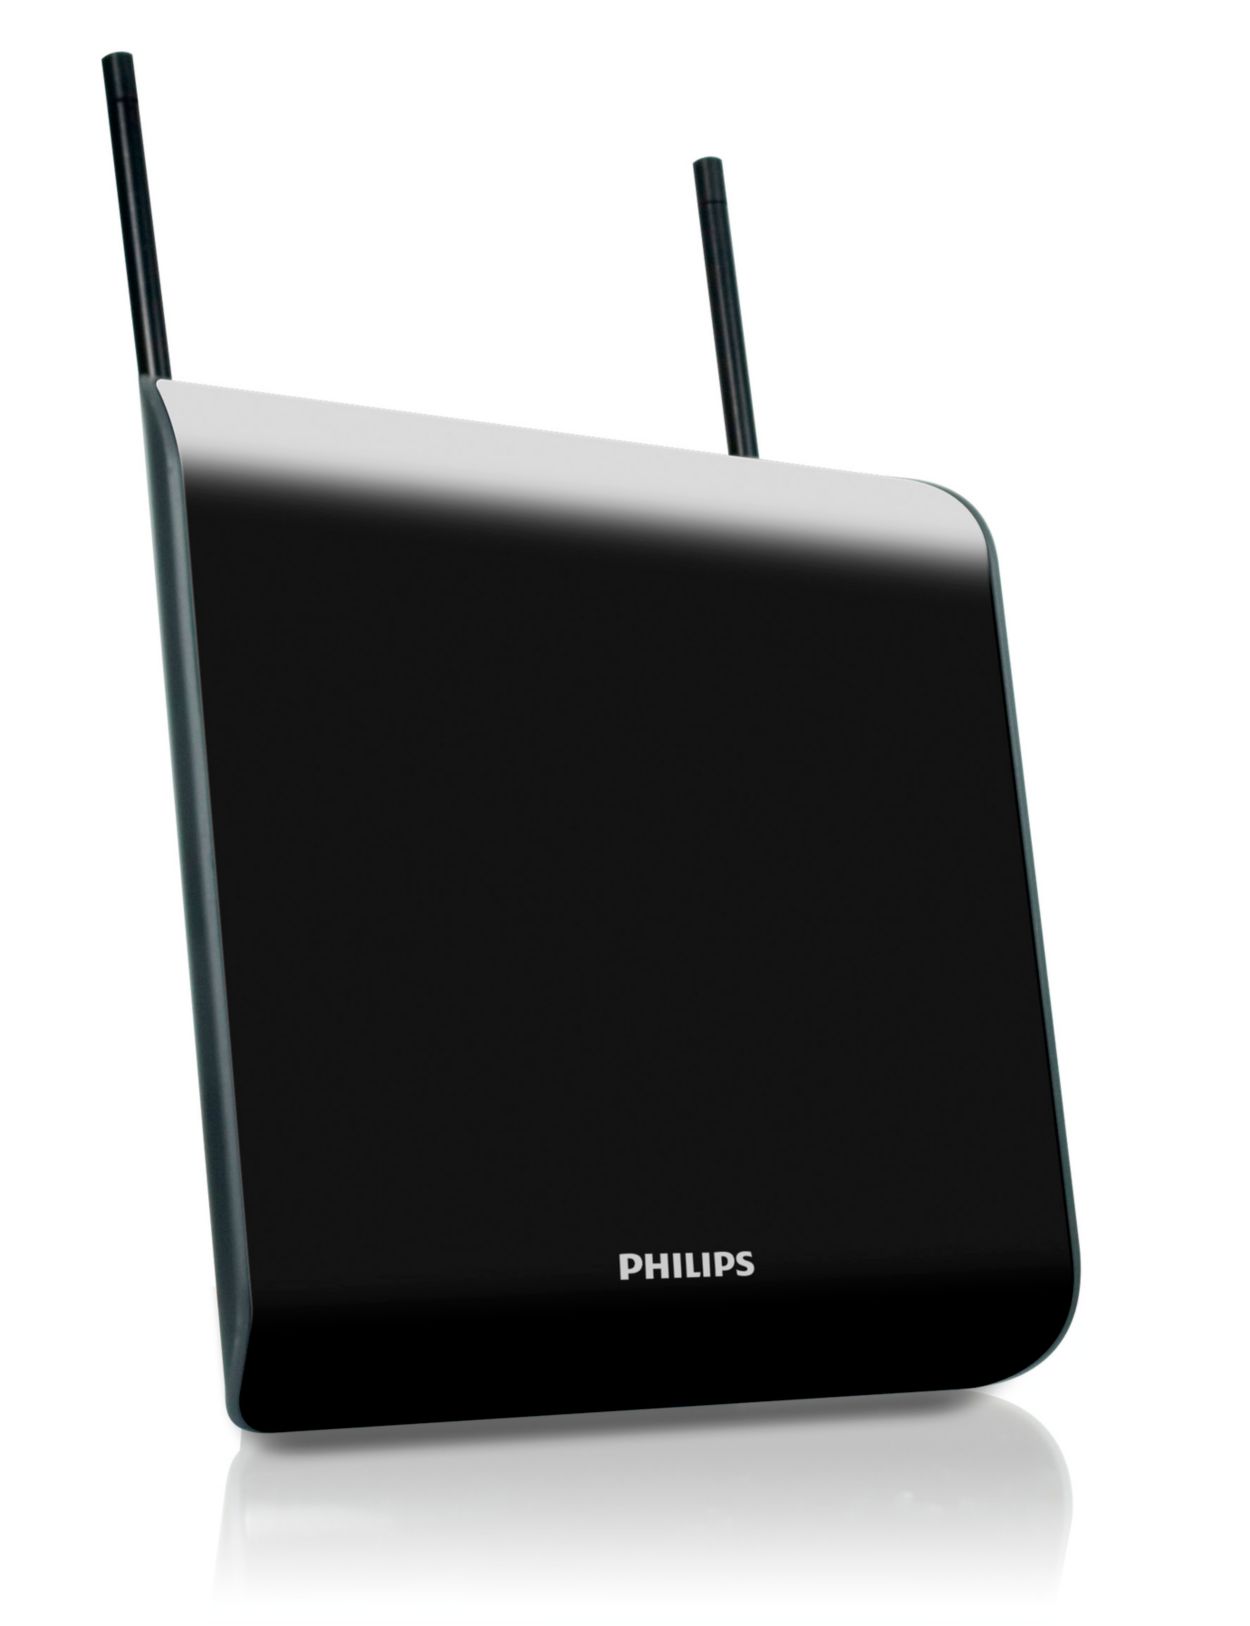 Philips Antena de TV HD amplificada, fácil montaje para parte superior de  TV, interior, largo alcance, Full 1080P 4K Ultra HDTV VHF UHF, amplificador